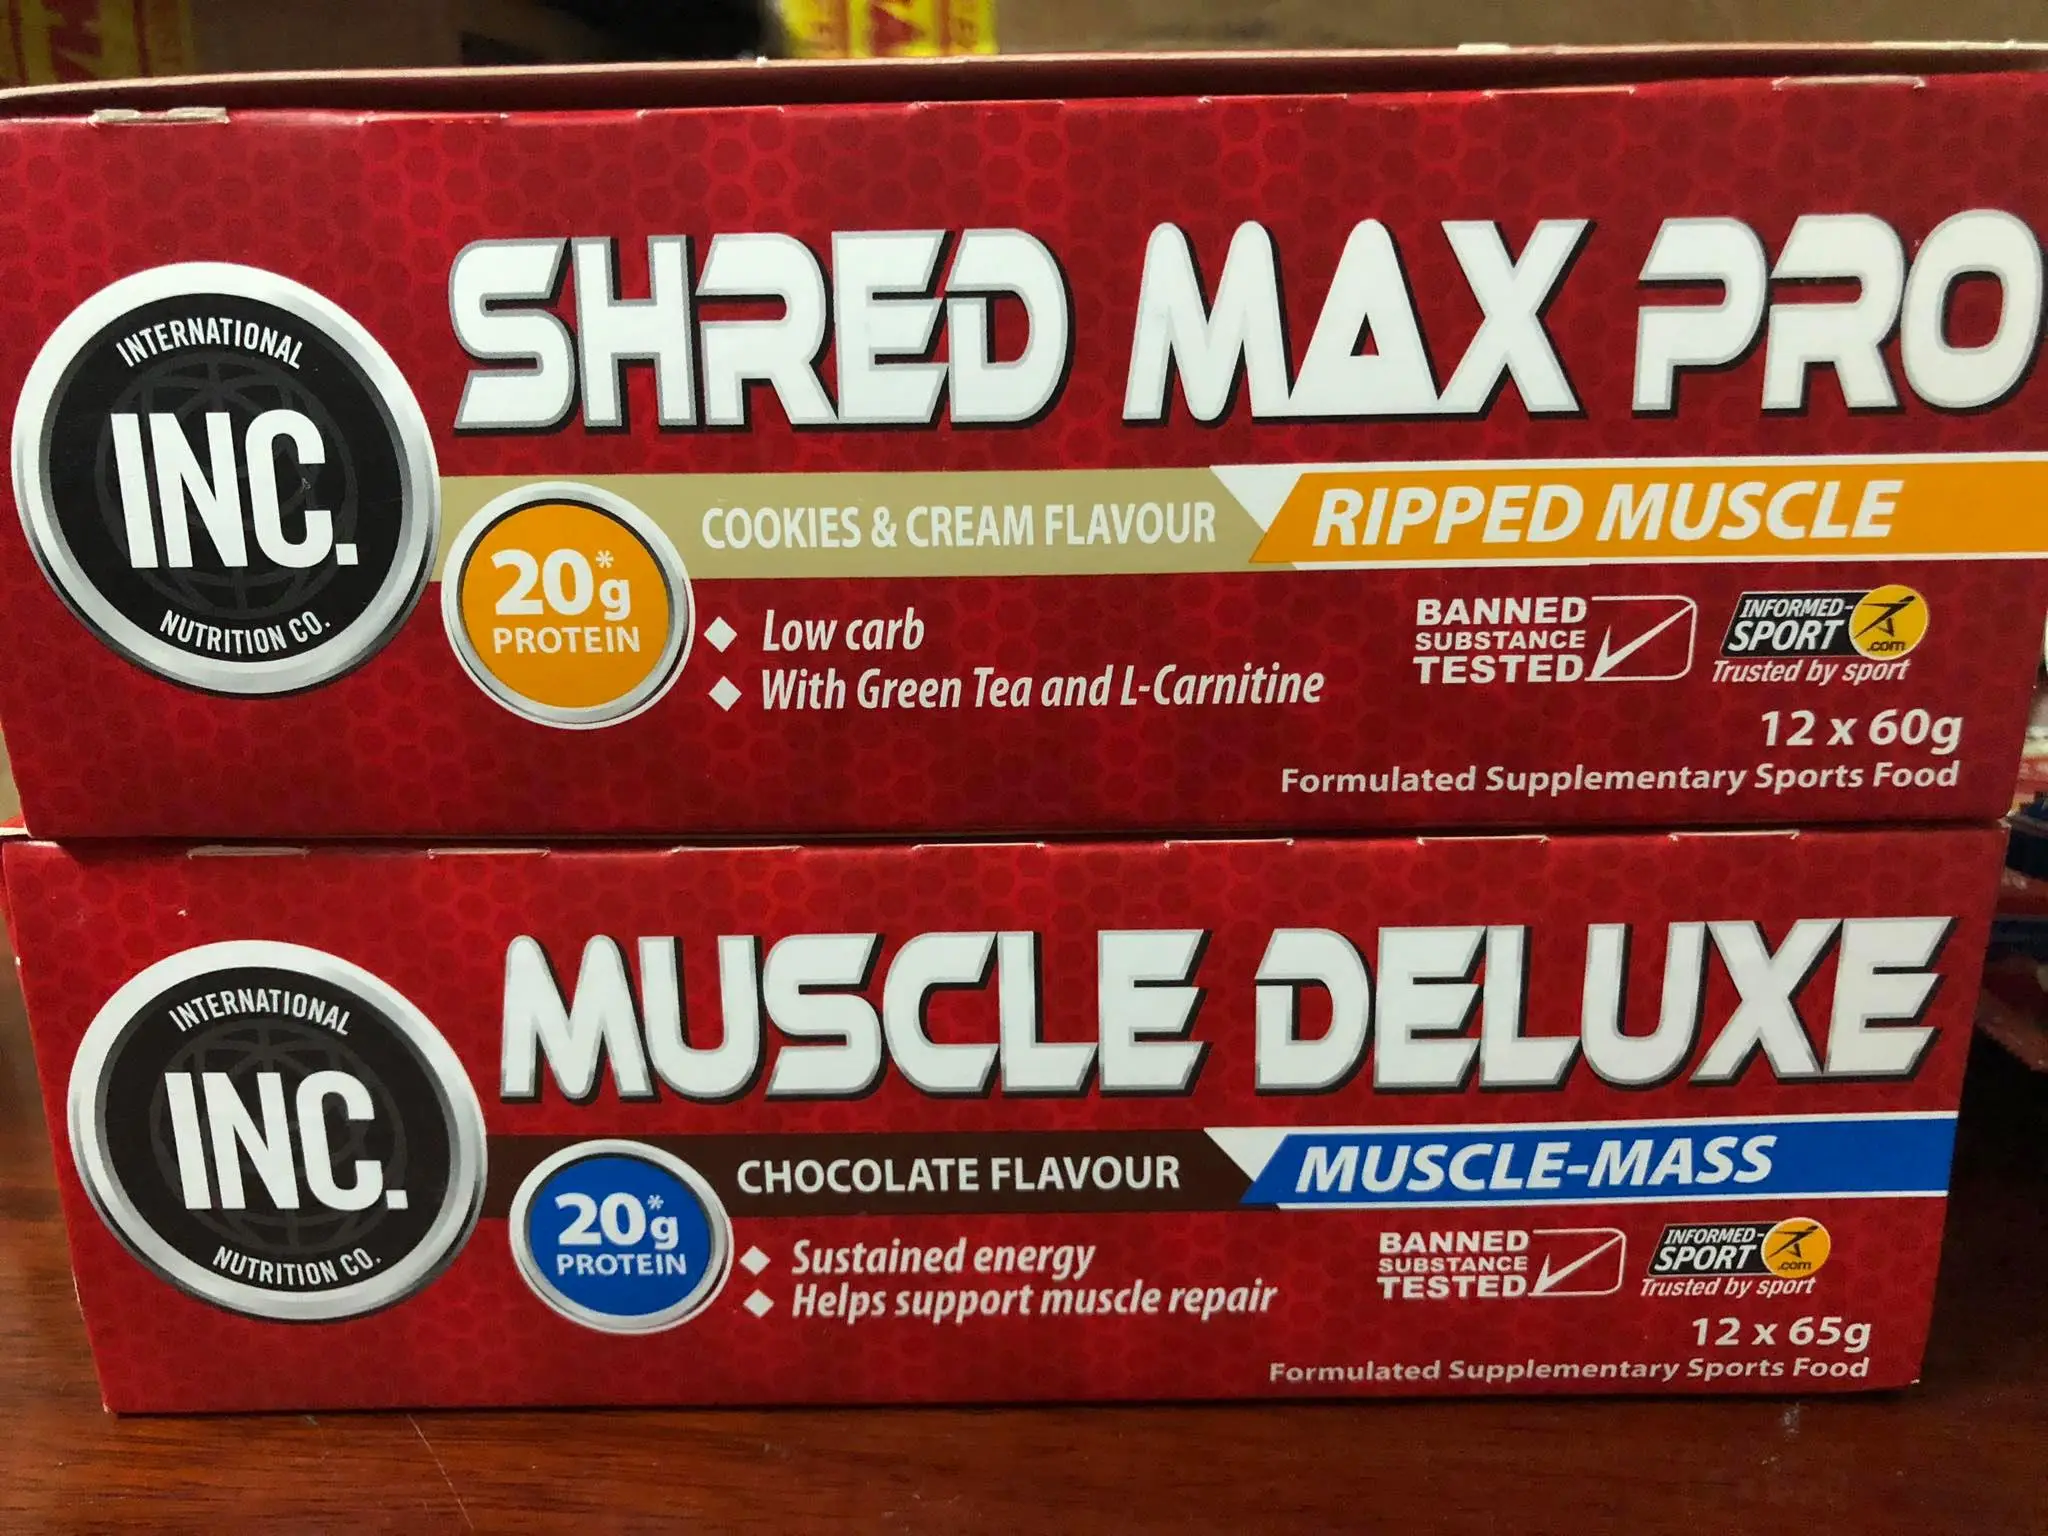 Shred max pro protein bar